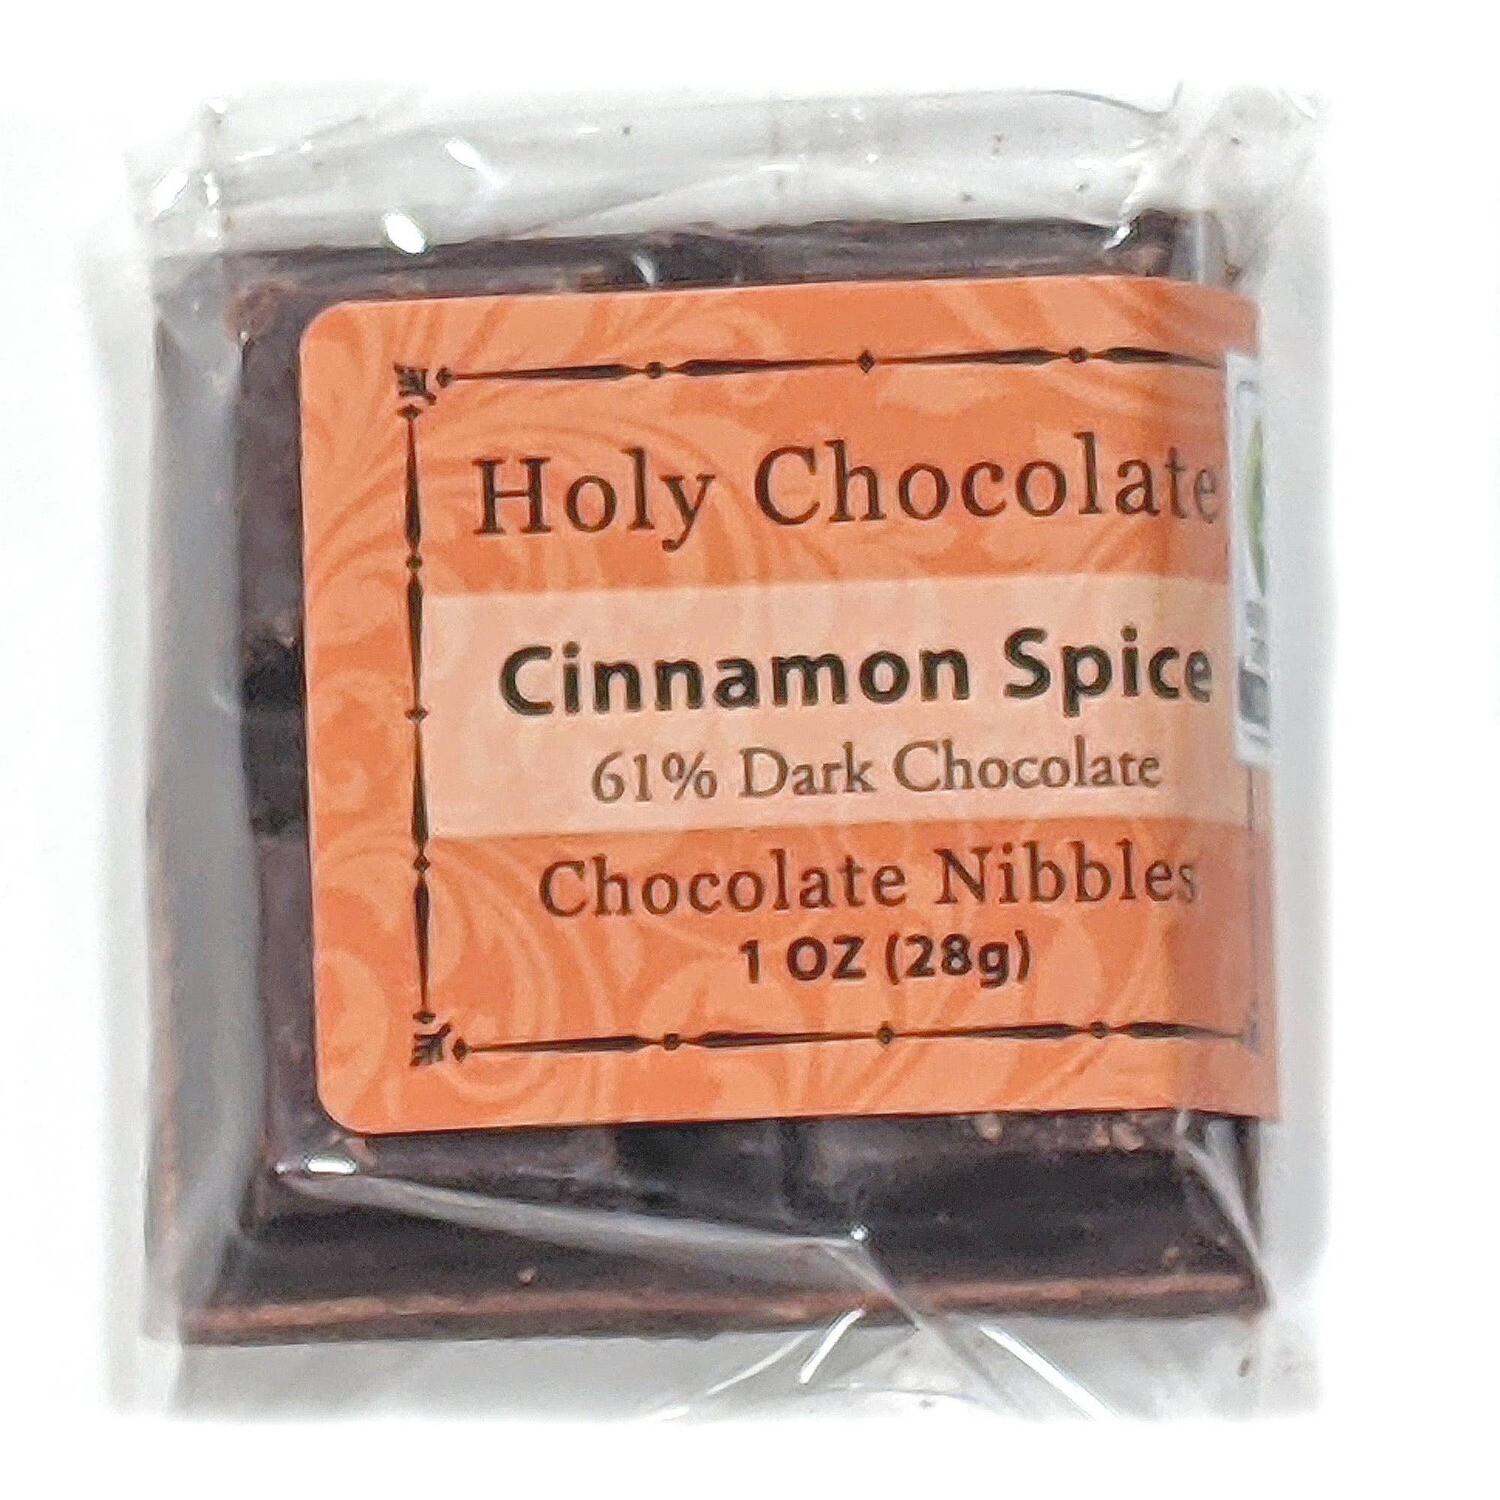 Cinnamon Spice Holy Chocolate